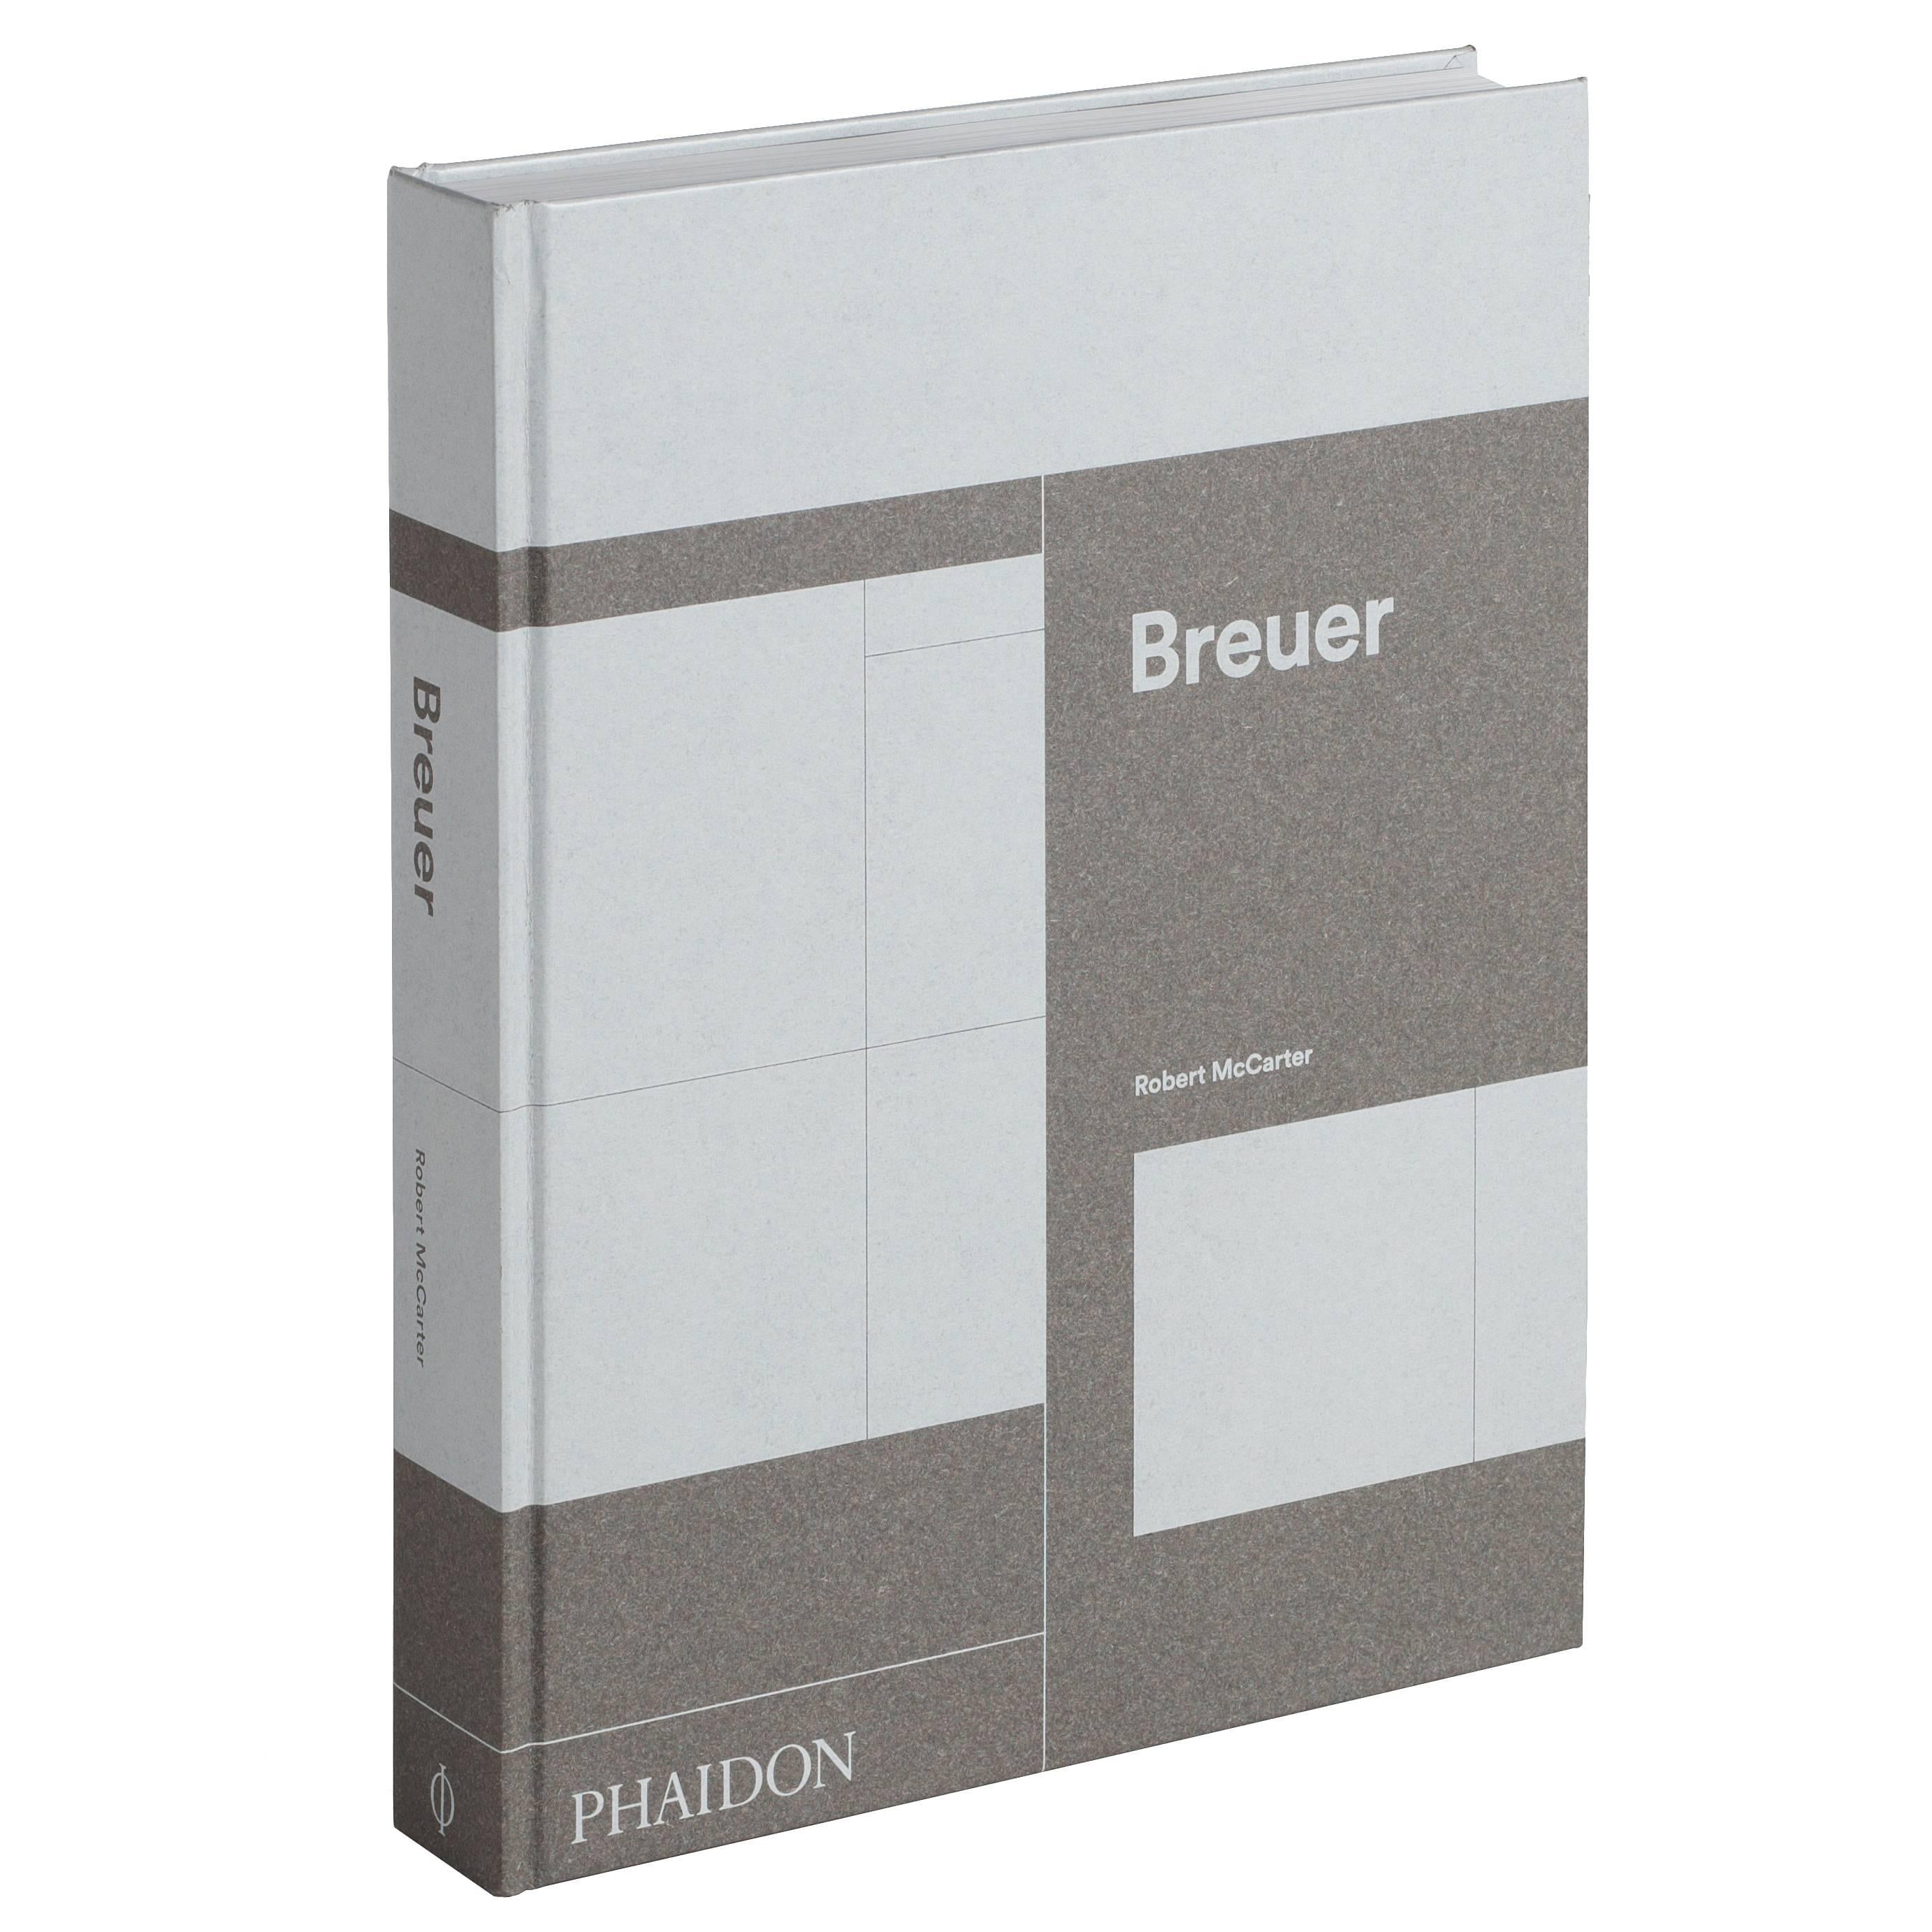 Breuer Monograph book